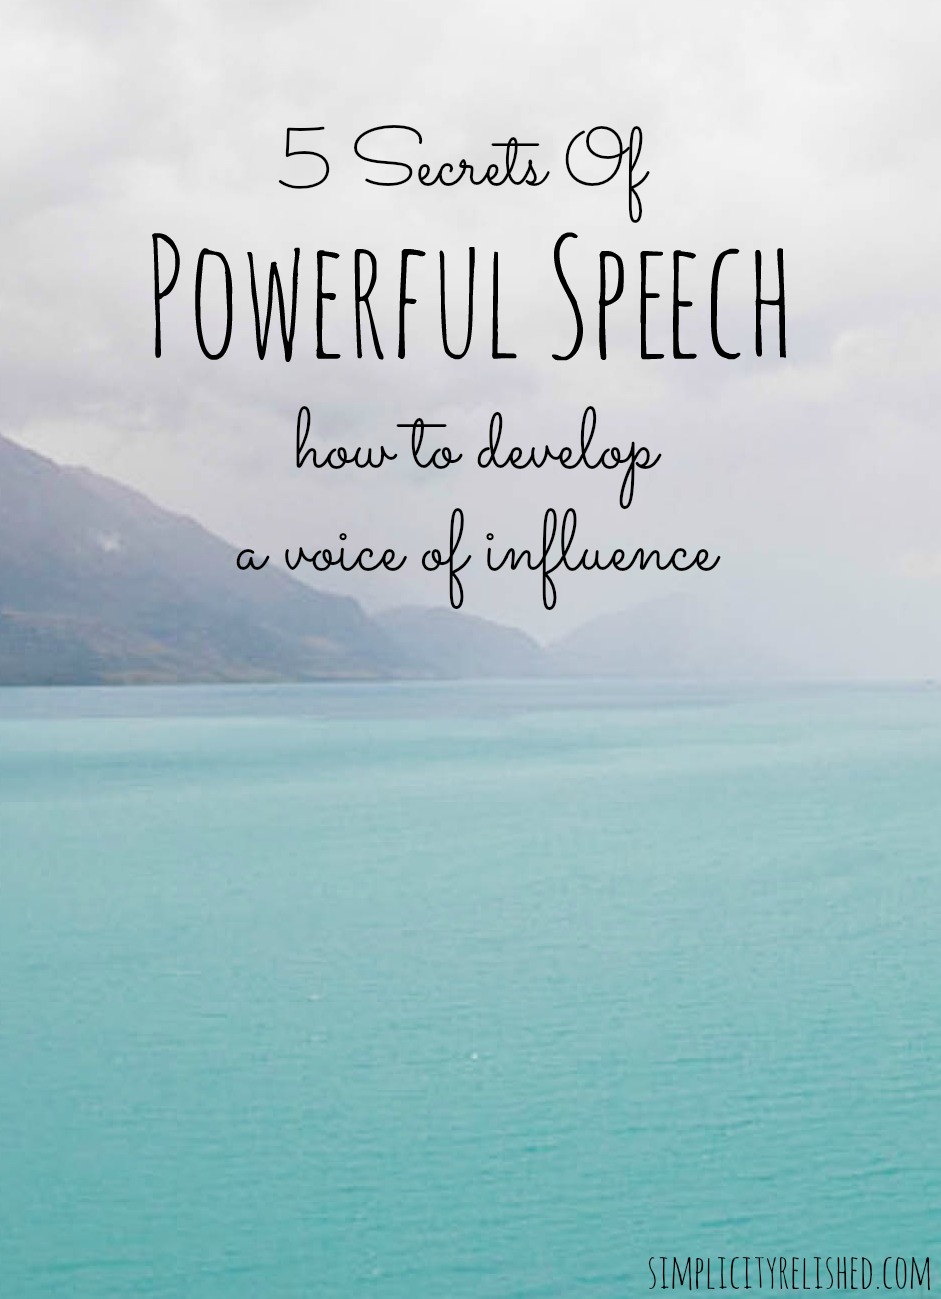 powerful speech meaning